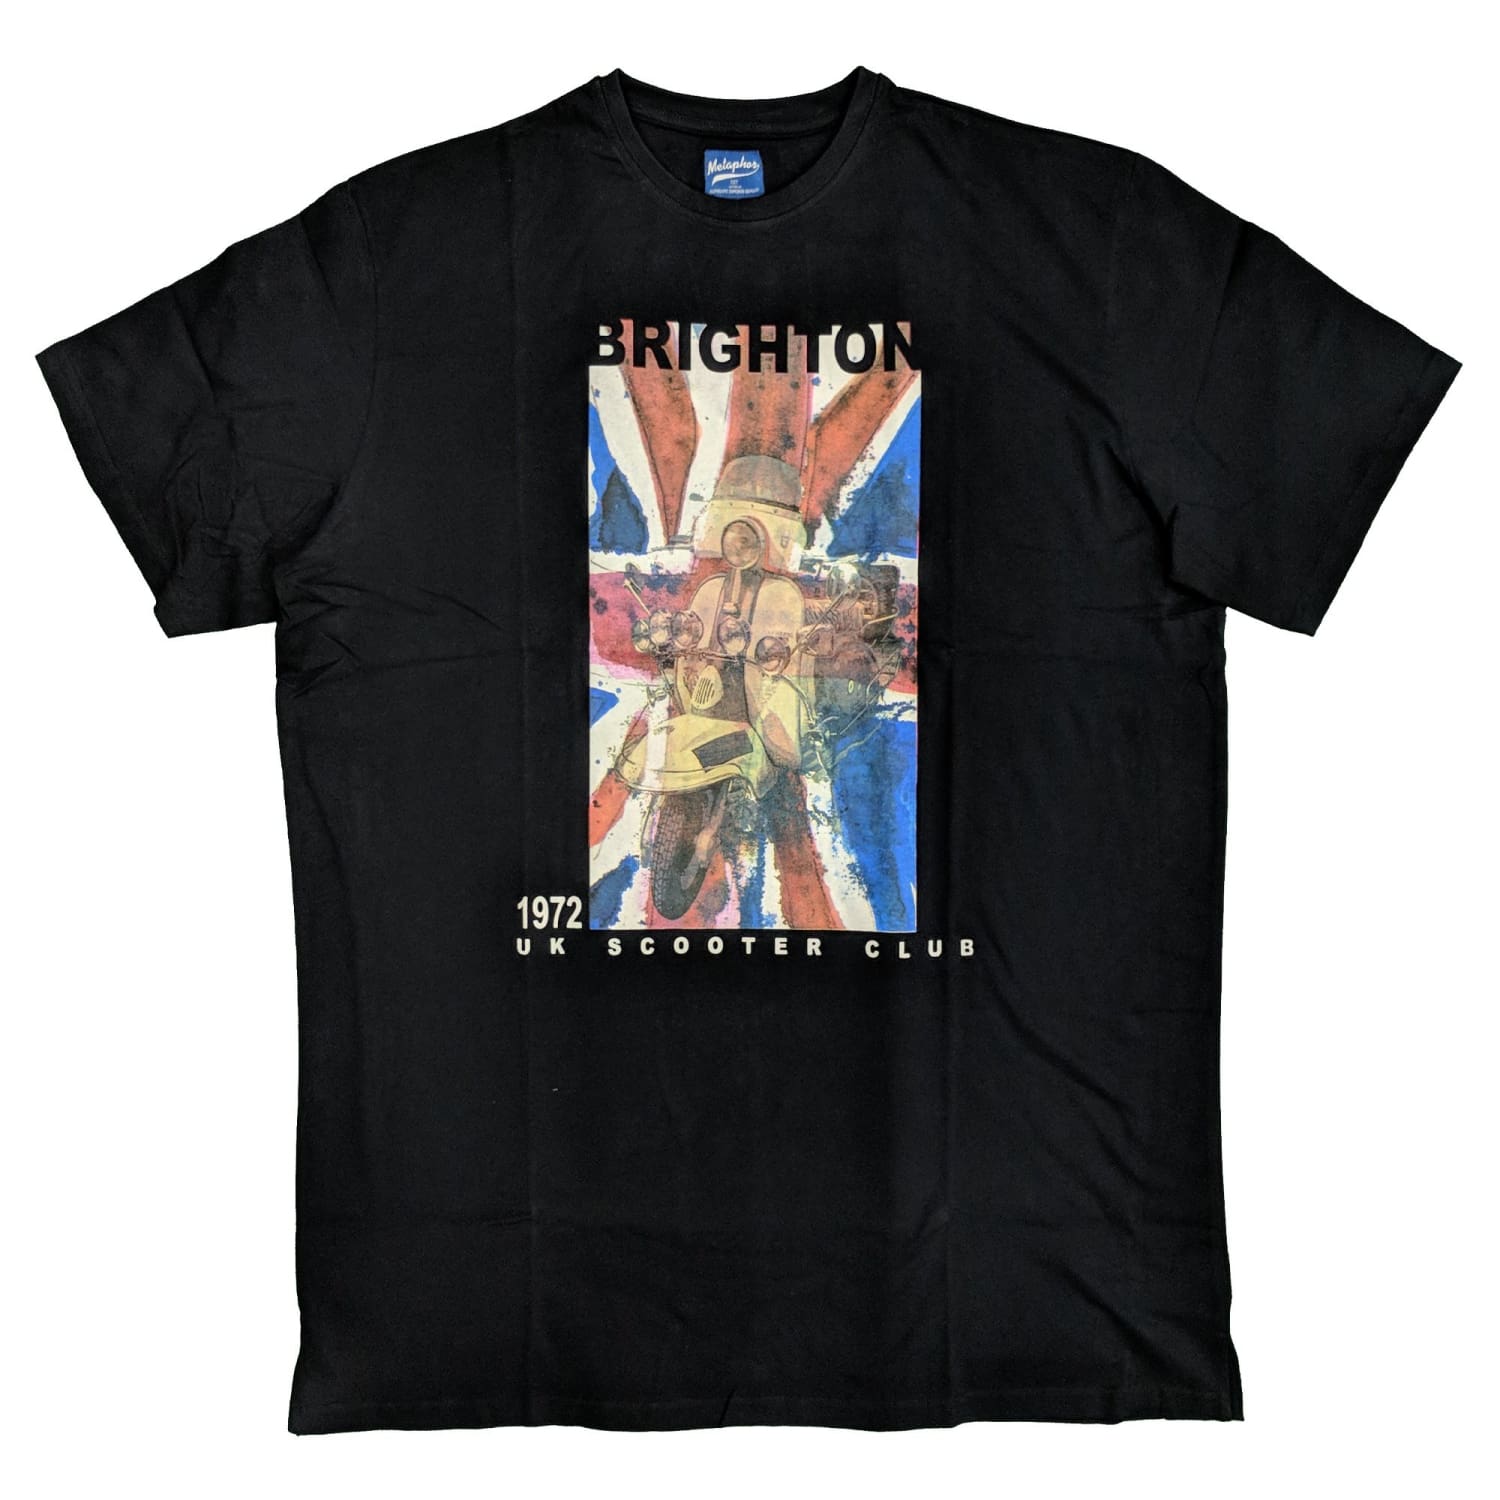 Metaphor T-Shirt - 04019 - Navy (Brighton) 1